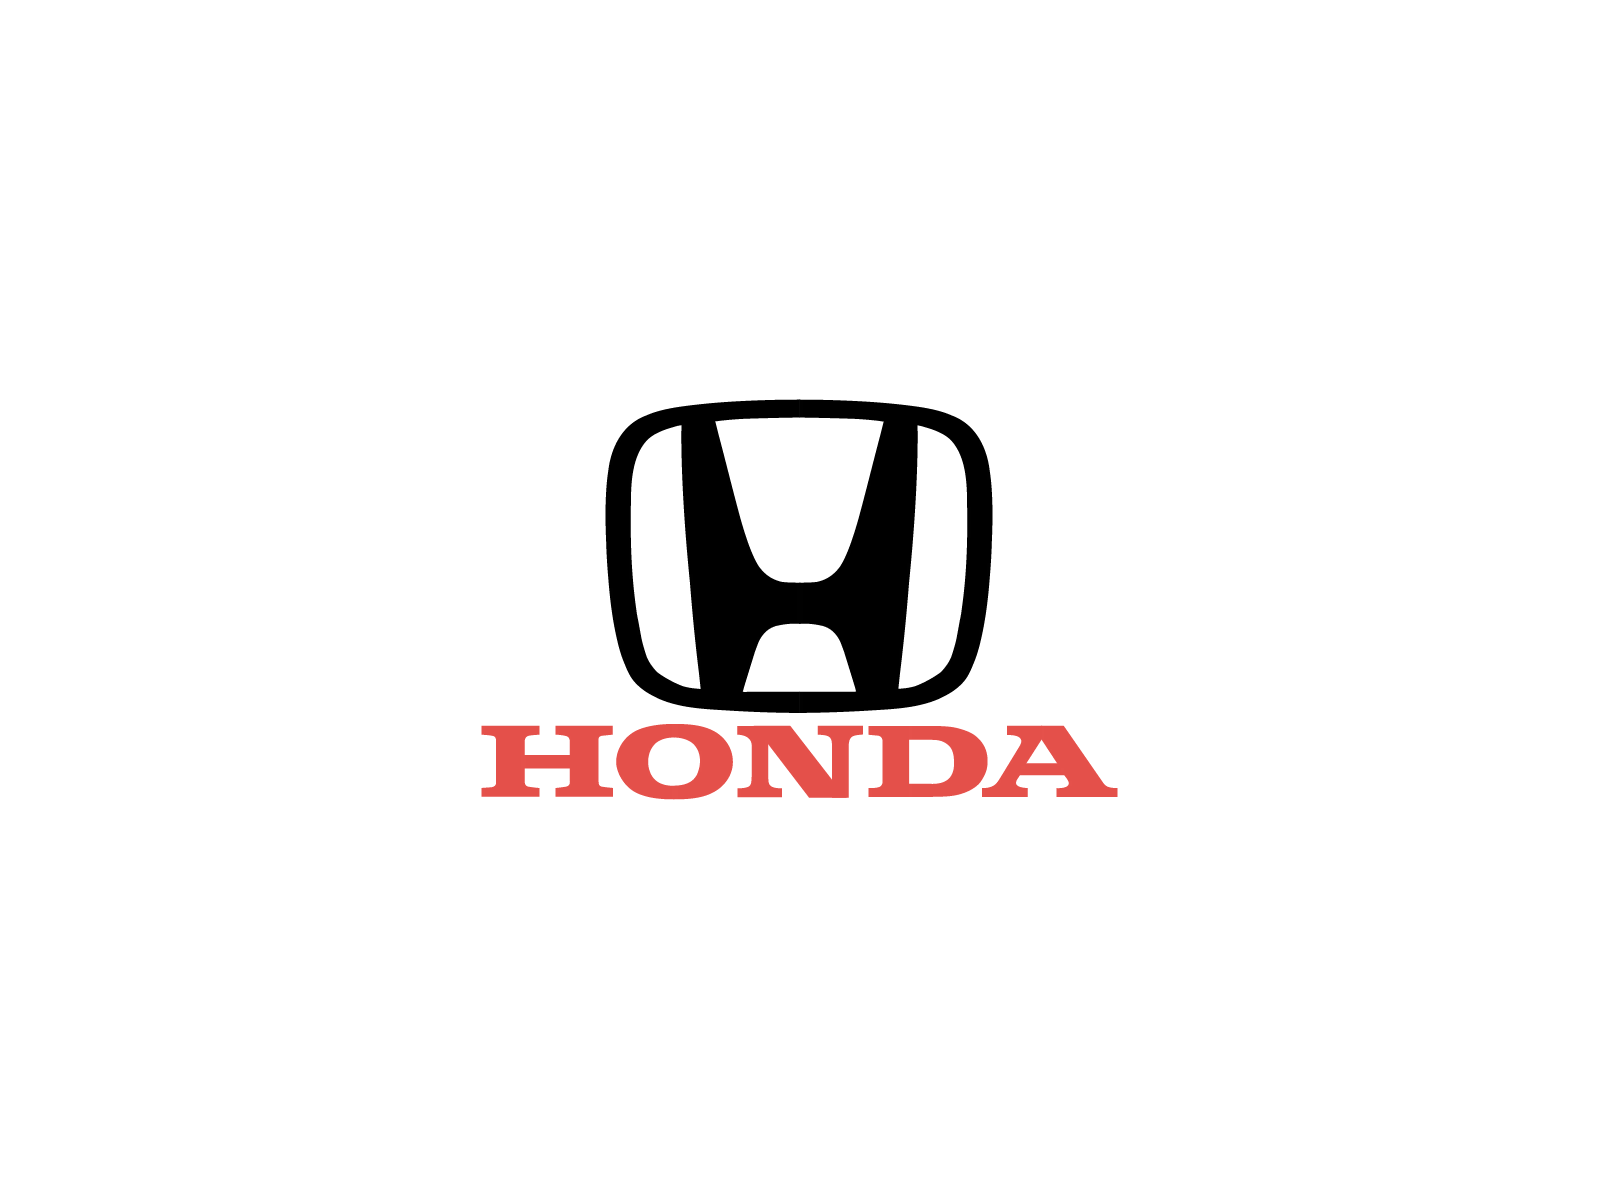 Honda Logo Animation By Quang Nguyen On Dribbble